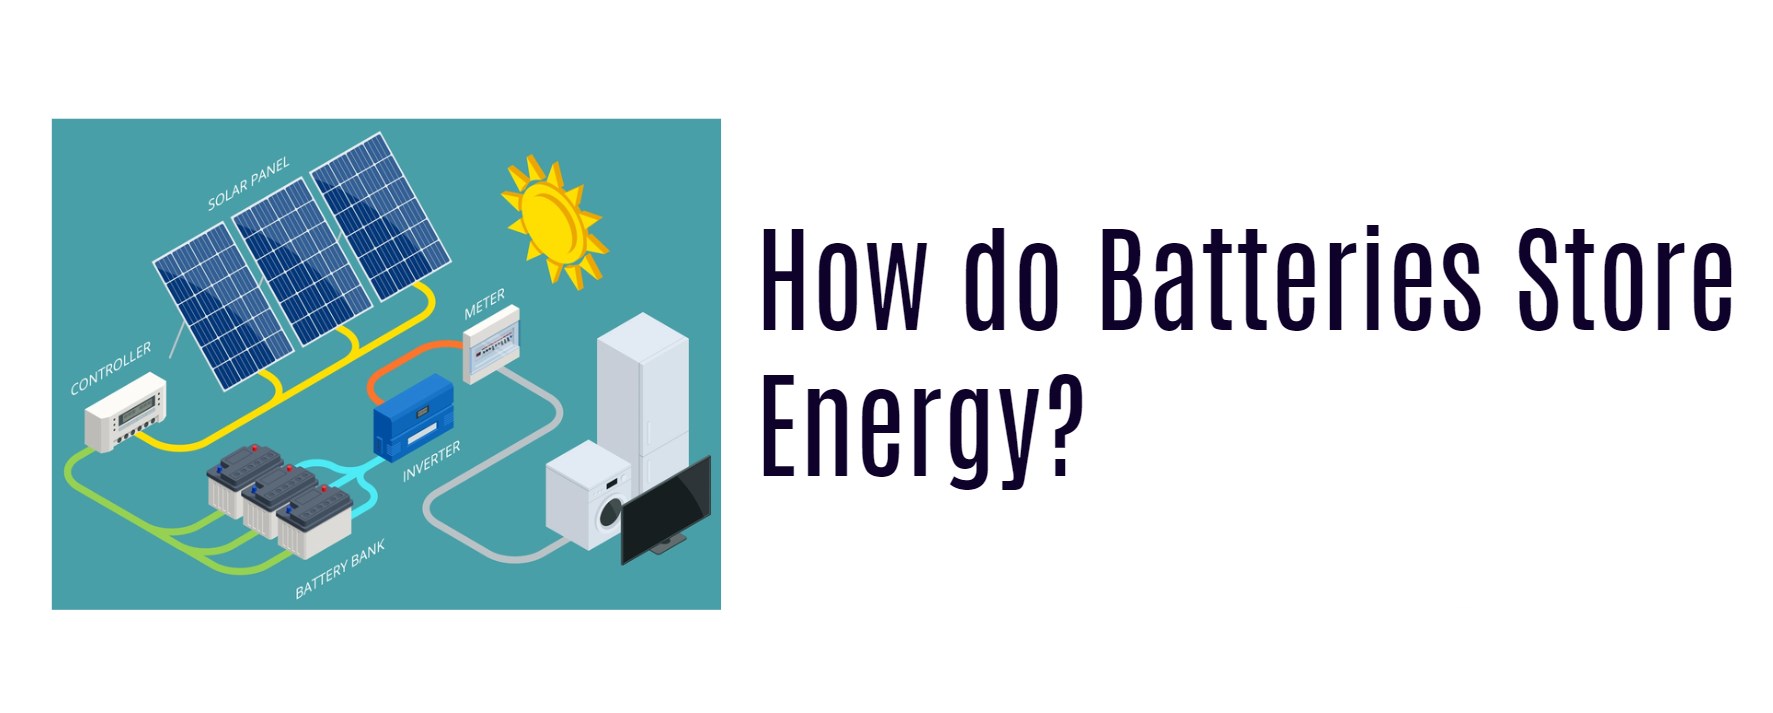 How do Batteries Store Energy?